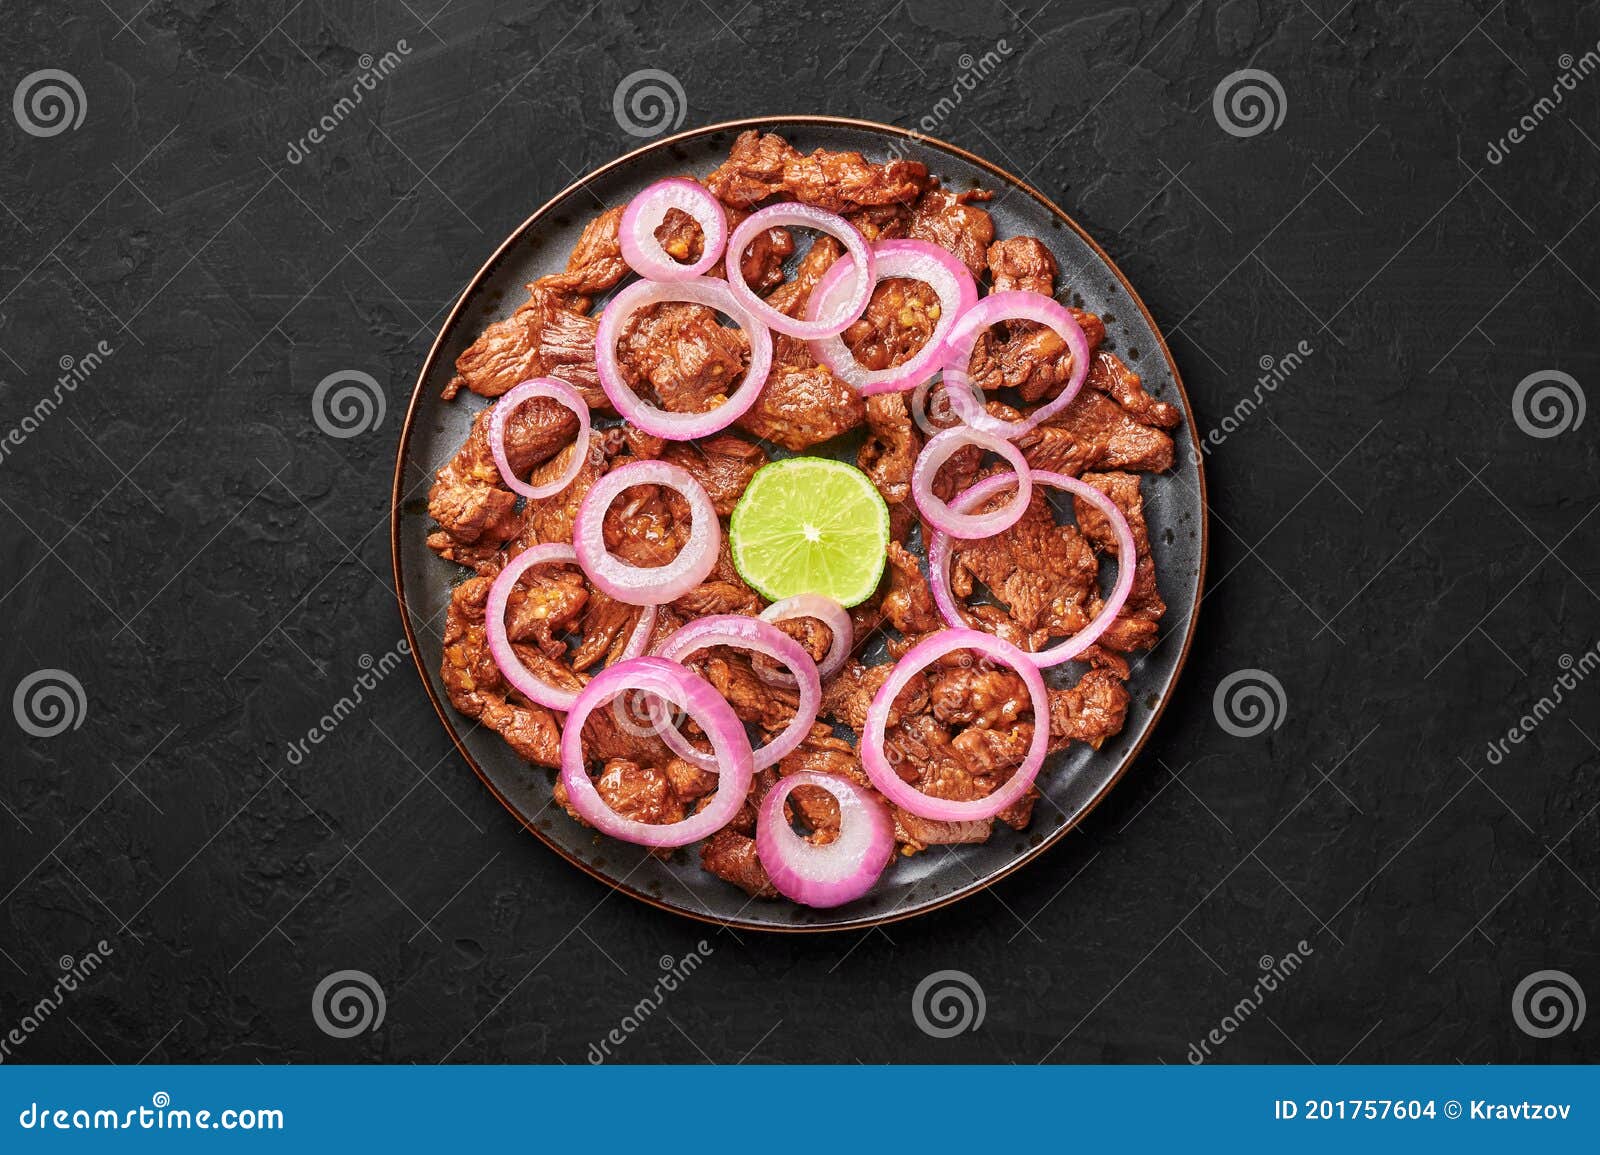 bistek tagalog or bistec encebollado on black plate on slate table top. filipino spanish cuisine beef steak with onion